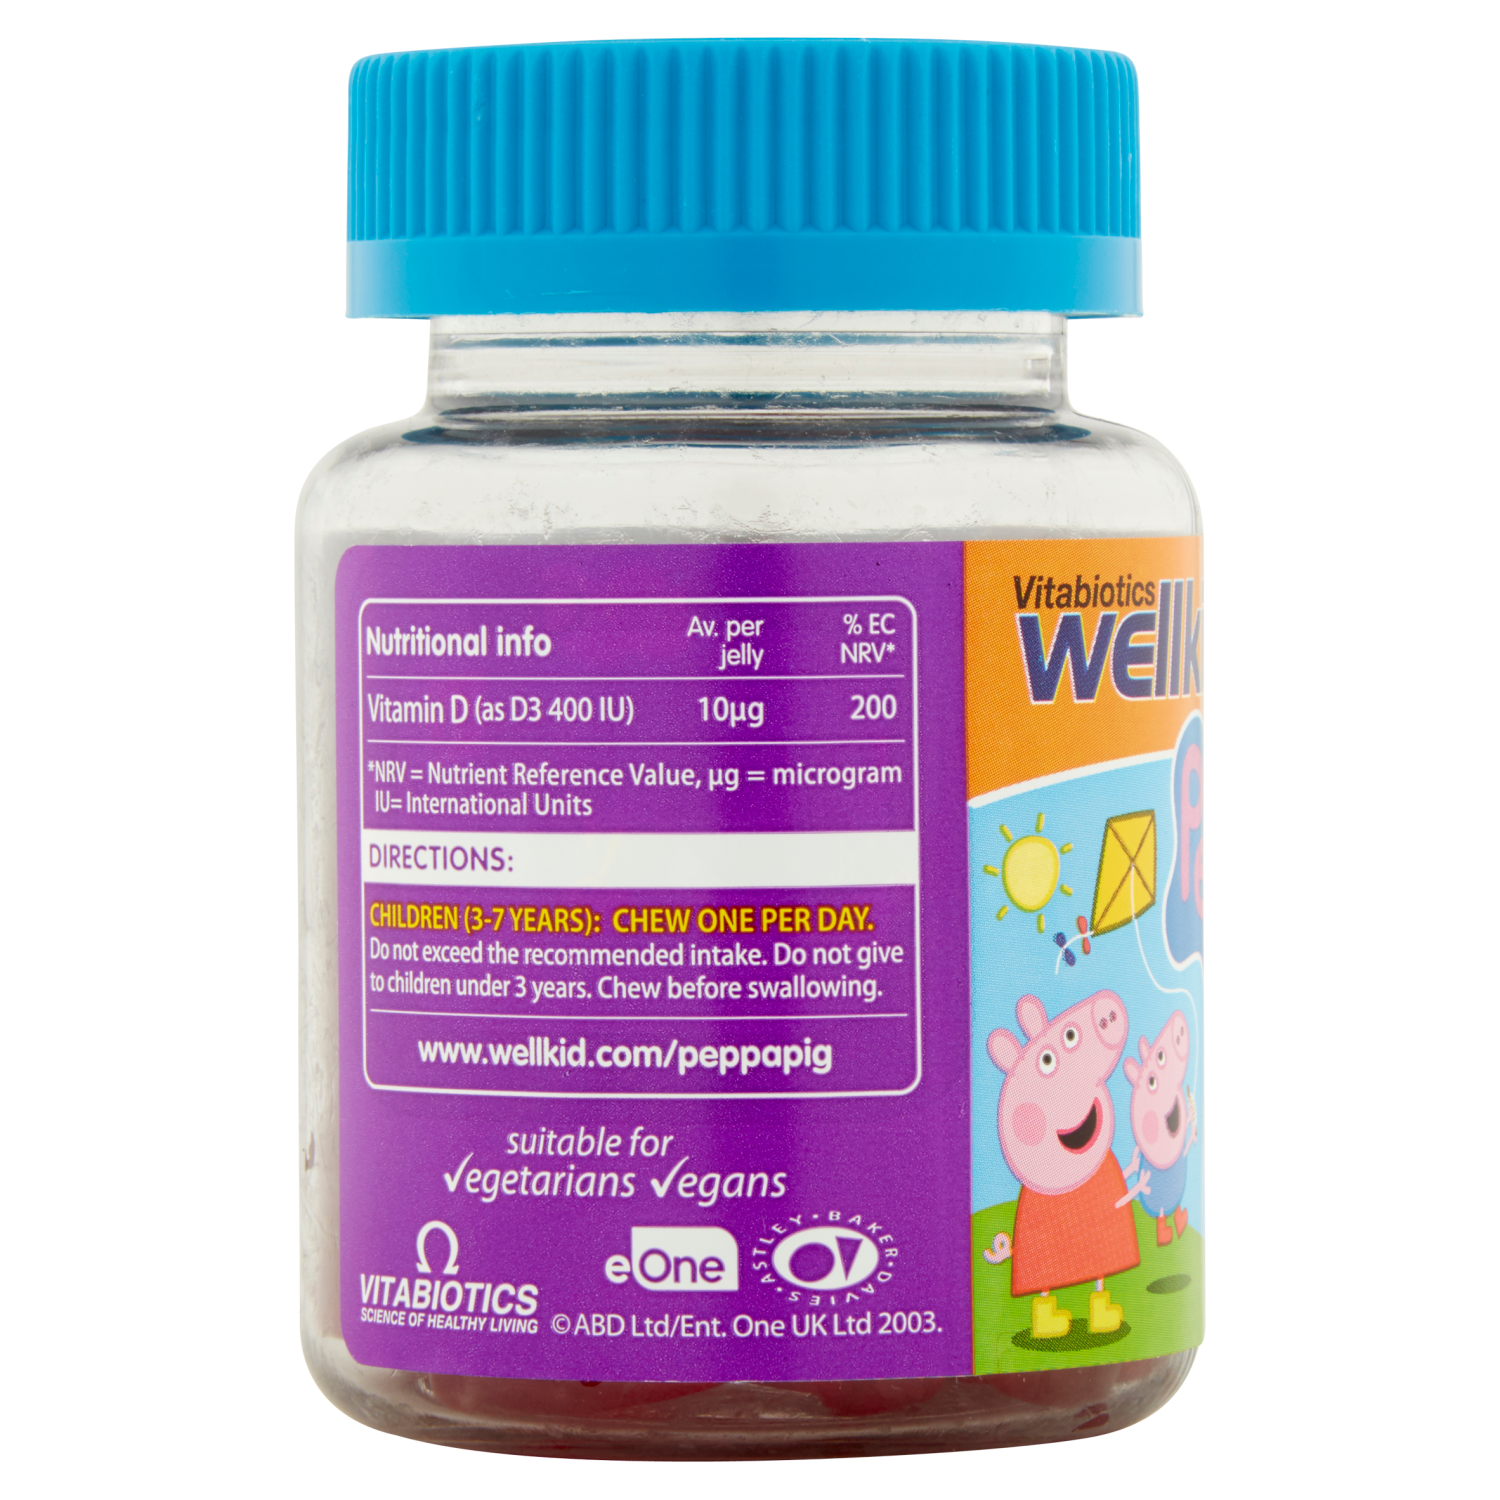 Vitabiotics Wellkid Peppa Pig Vitamin D 30 Jellies